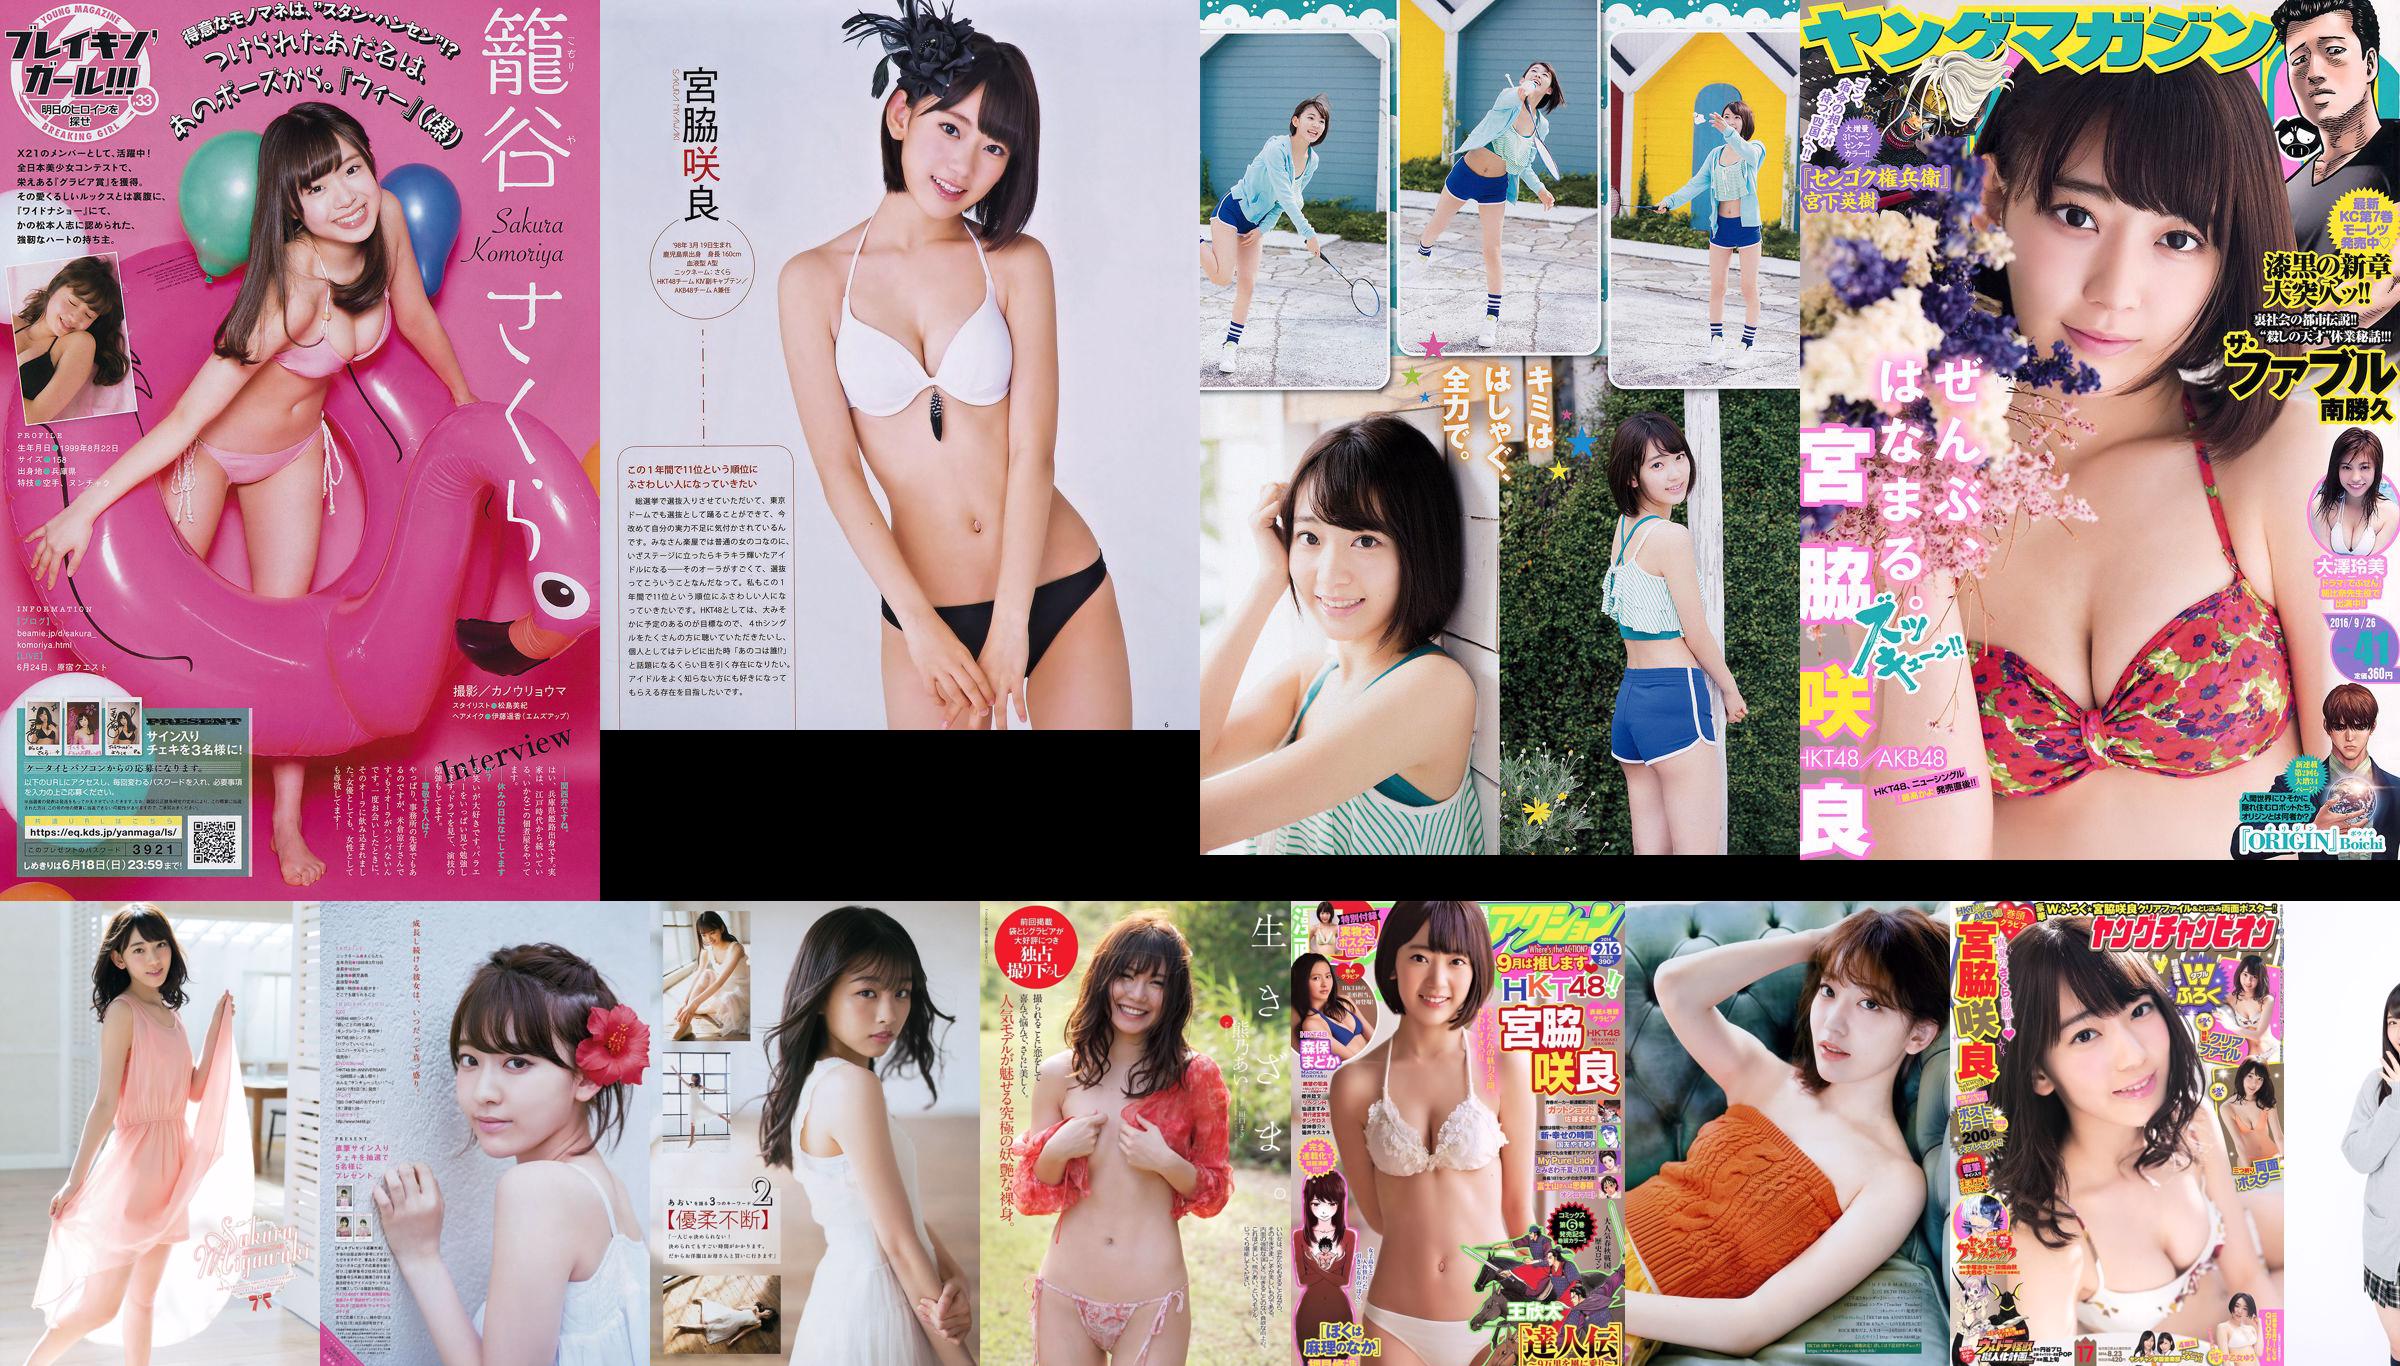 [Majalah Muda] Sakura Miyawaki 2018 Majalah Foto No.28 No.68ba73 Halaman 1